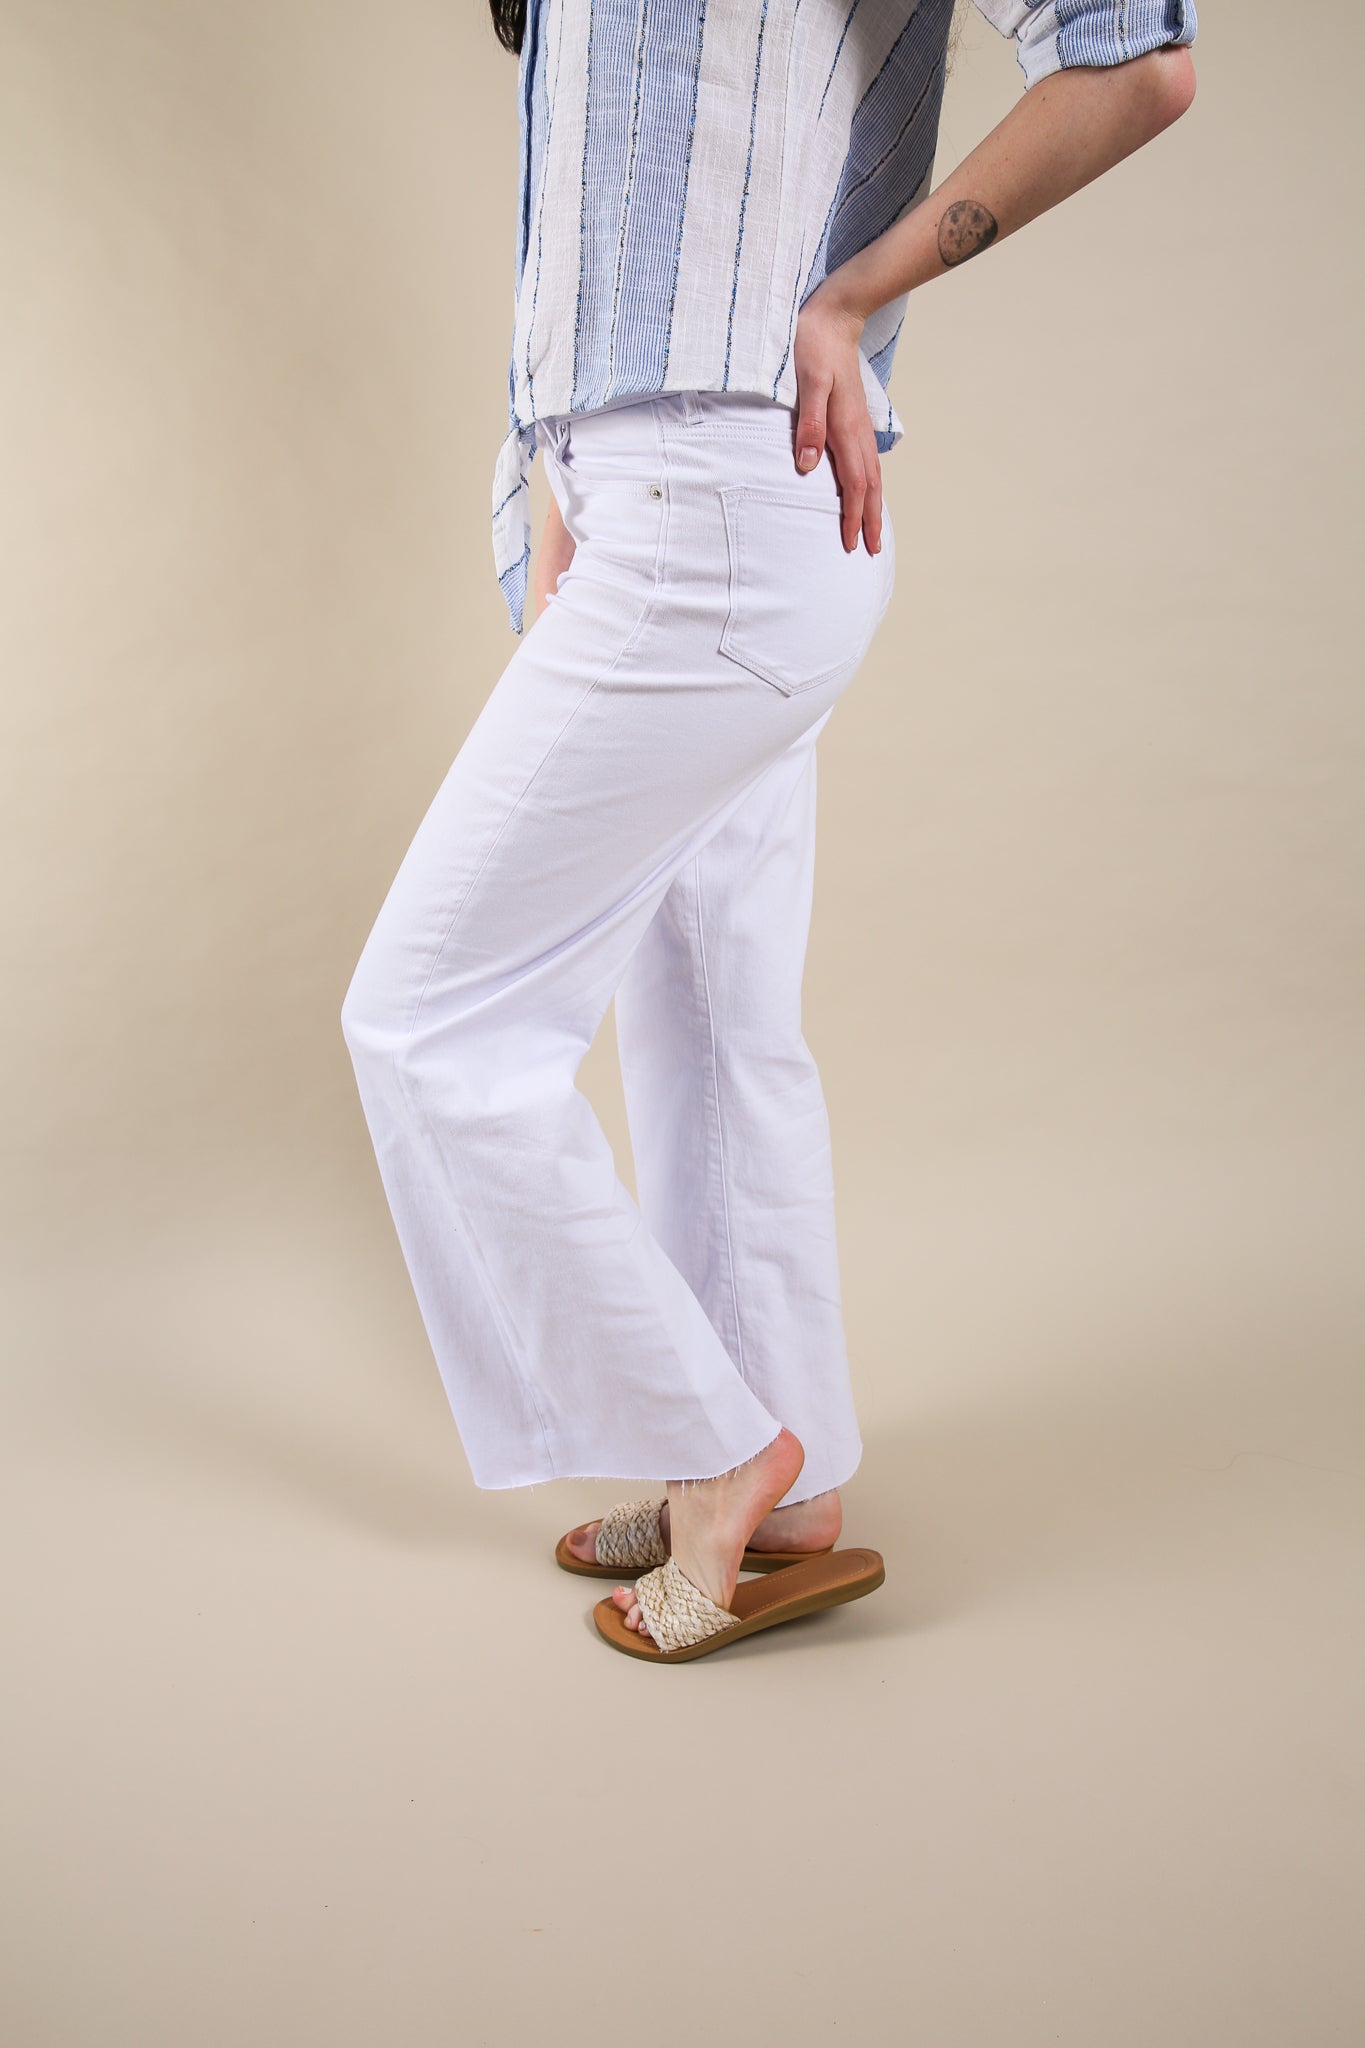 women's white jeans